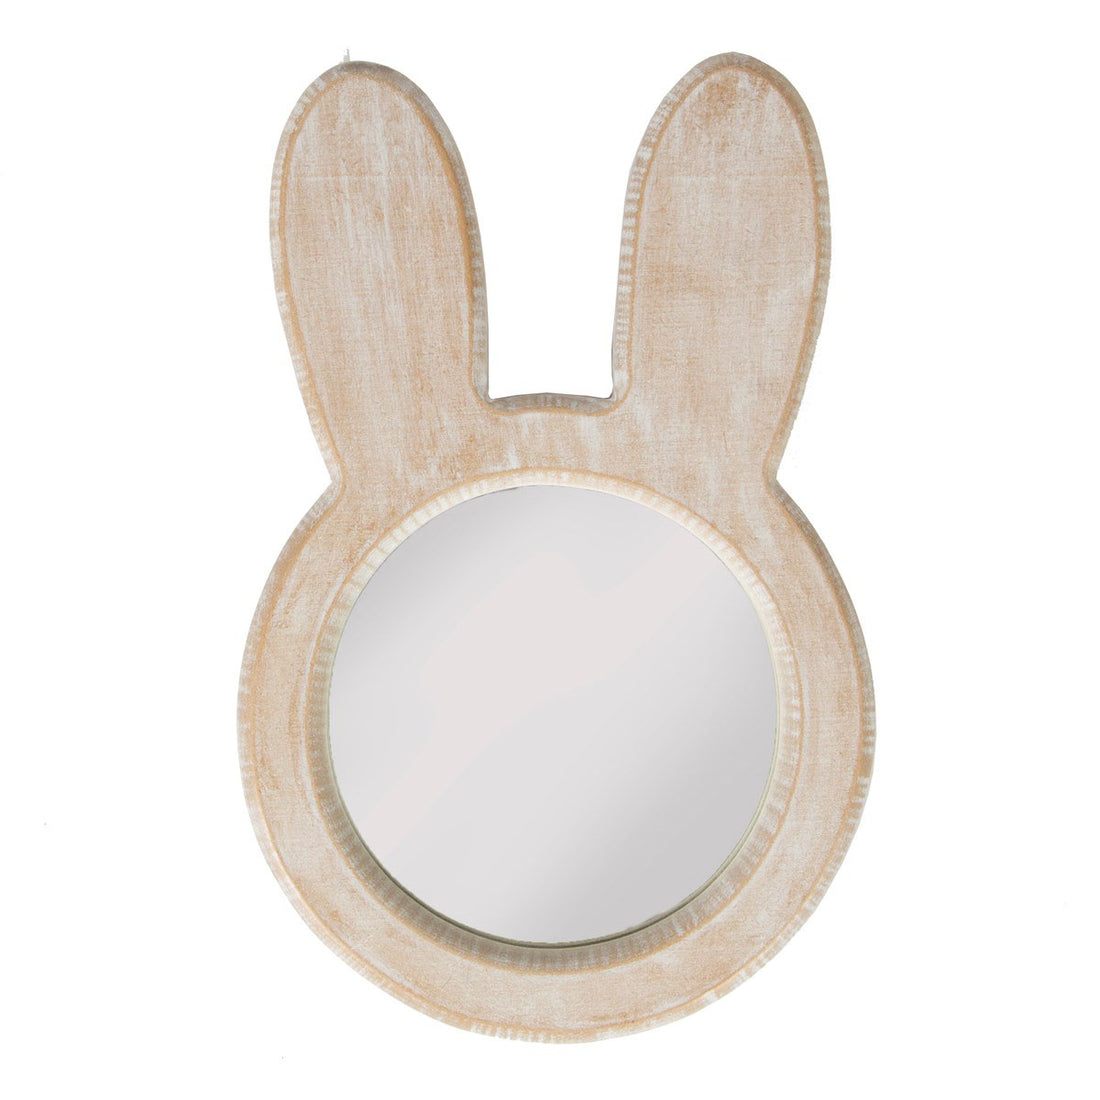 rjb-stone-bunny-face-rustic-wood-mirror-01